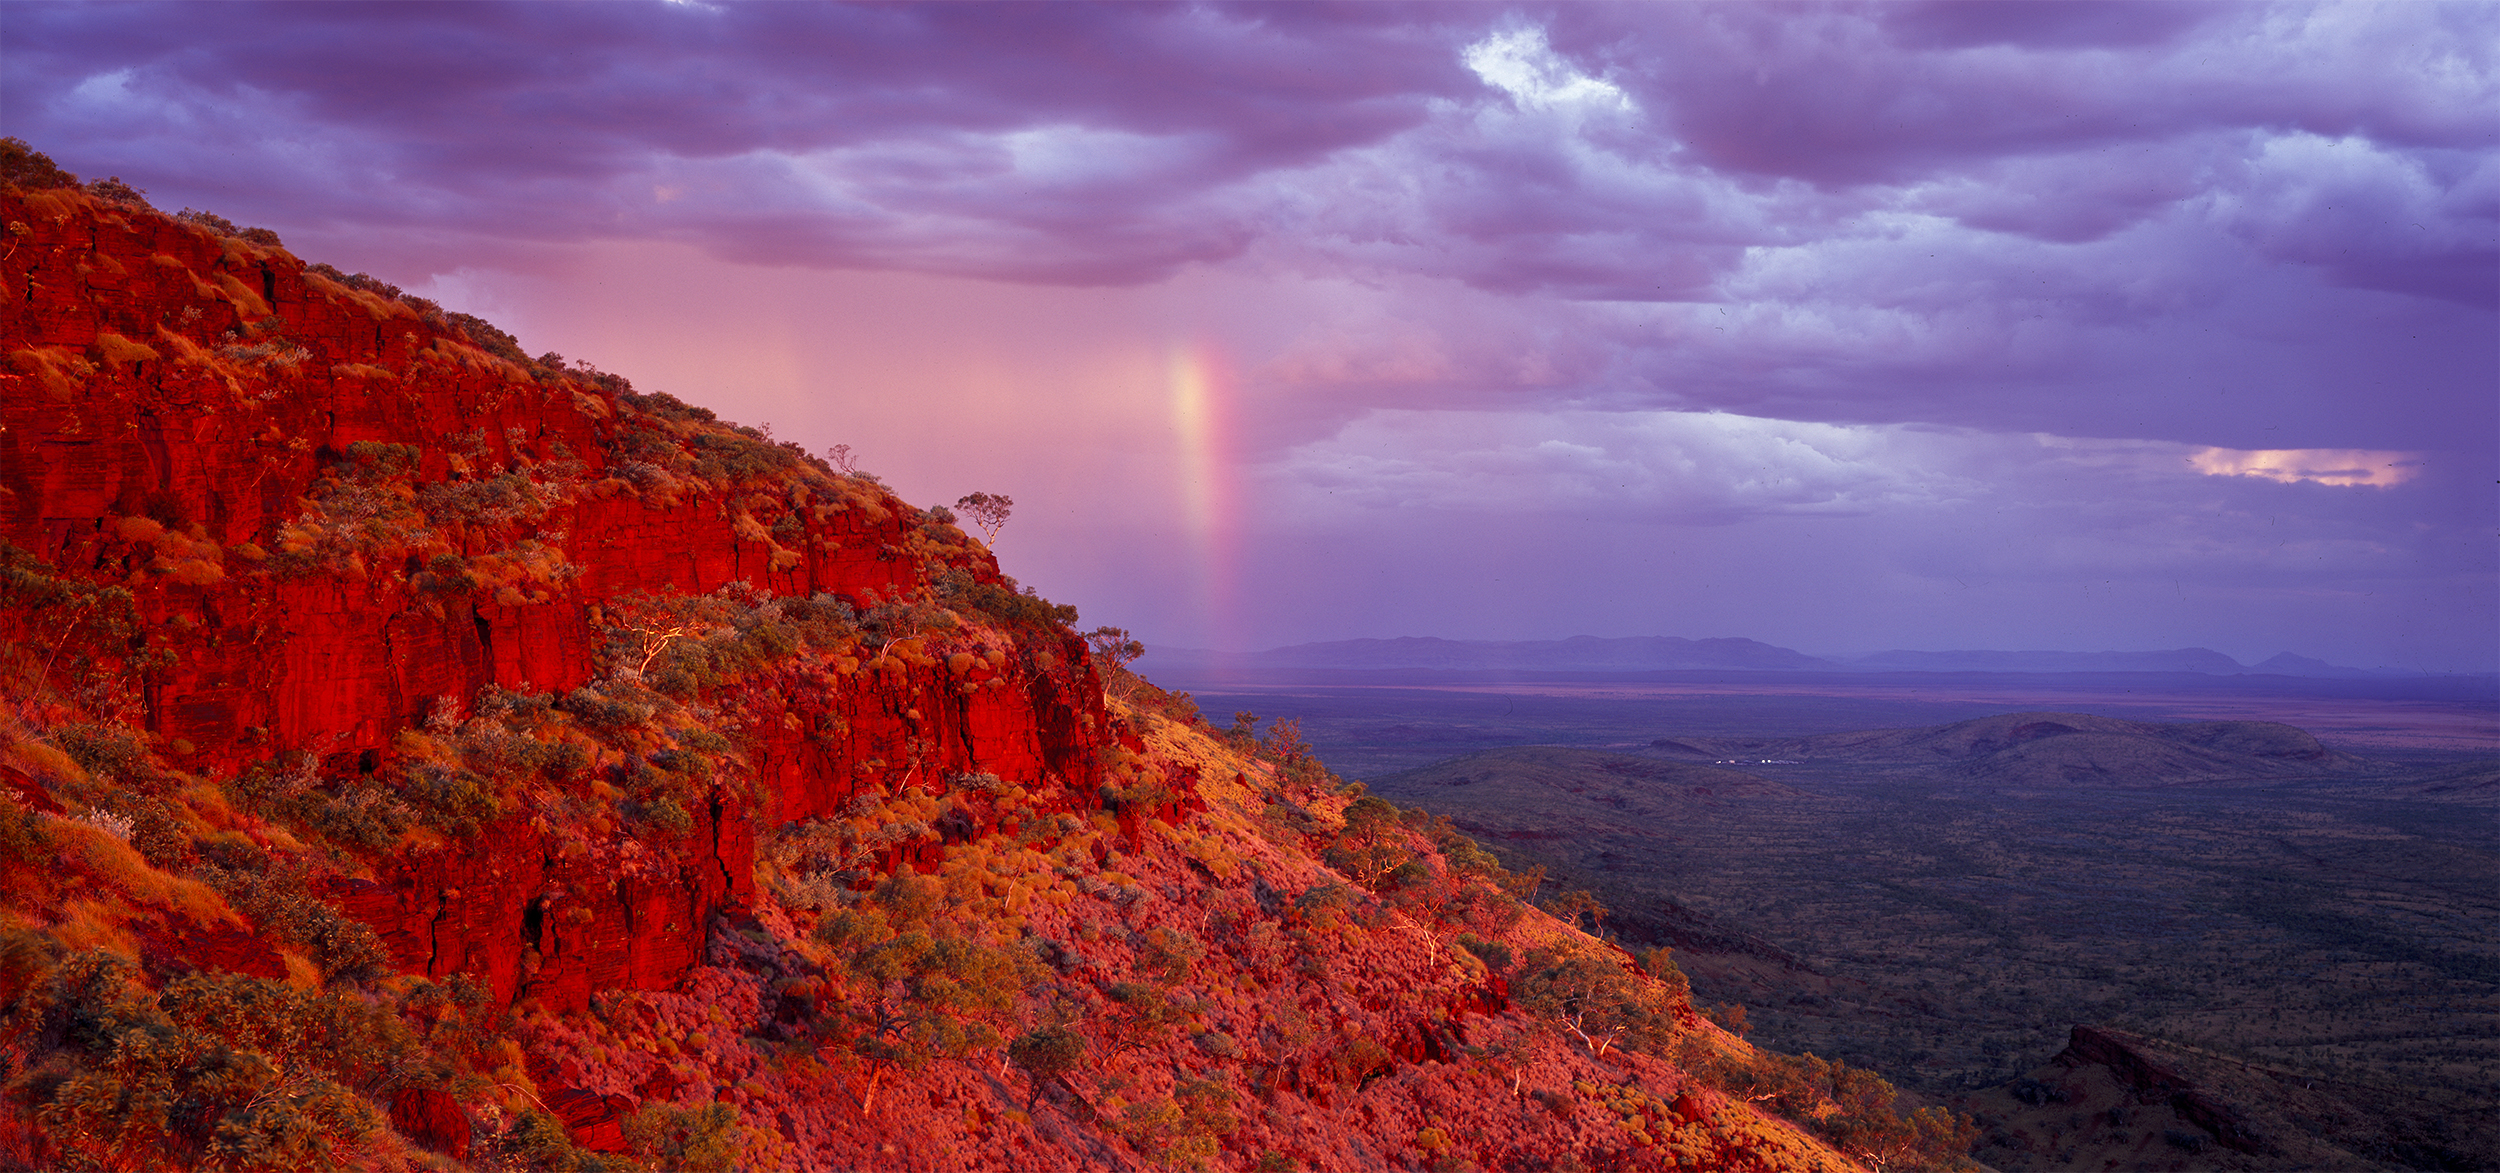  View Looking East past Mt Sheila, Hamersley Range, Western Australia, 2014.&nbsp; Edition of 3. 